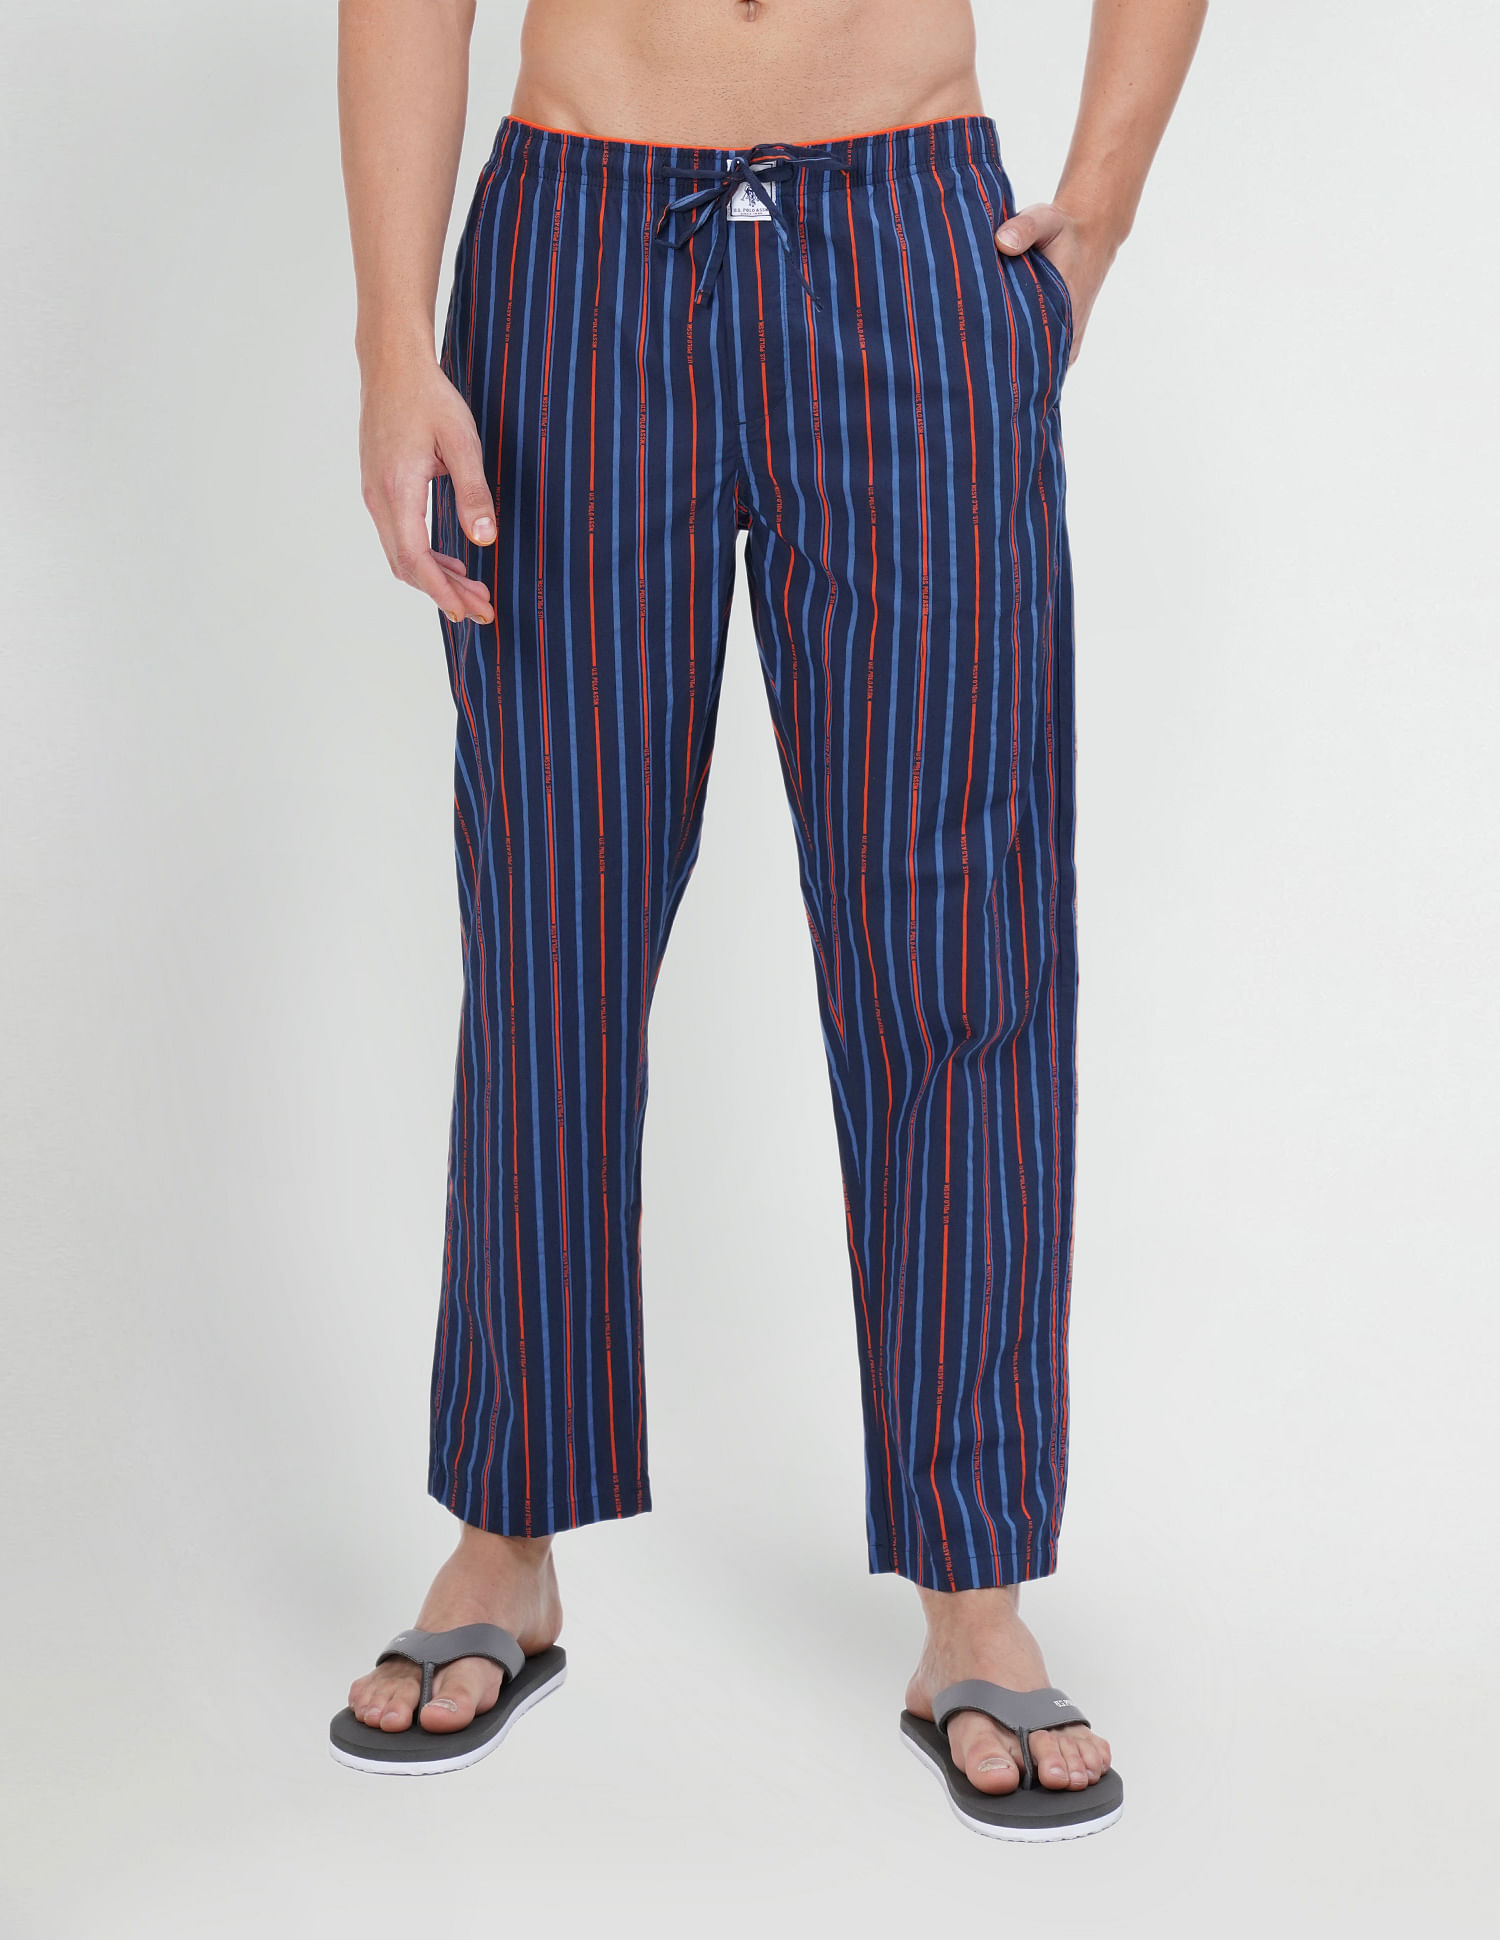 Women Sleepwear  Striped pajama pants Sleepwear women Candy cane stripes